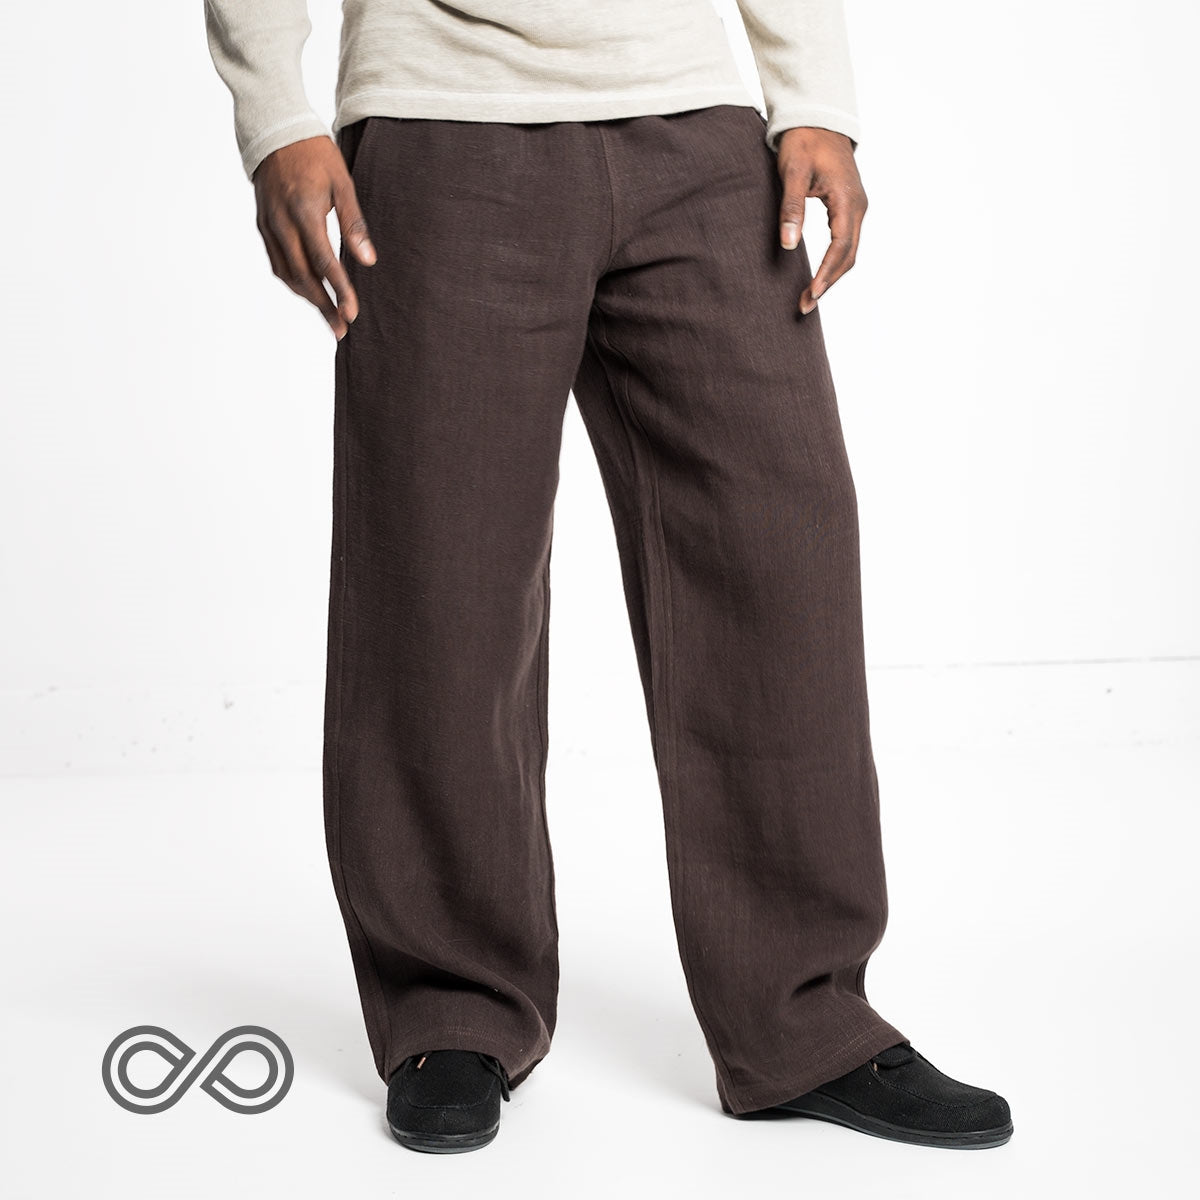 100% Organic Hemp Yoga Pants (Unisex; Elastic-Free; Latex-Free